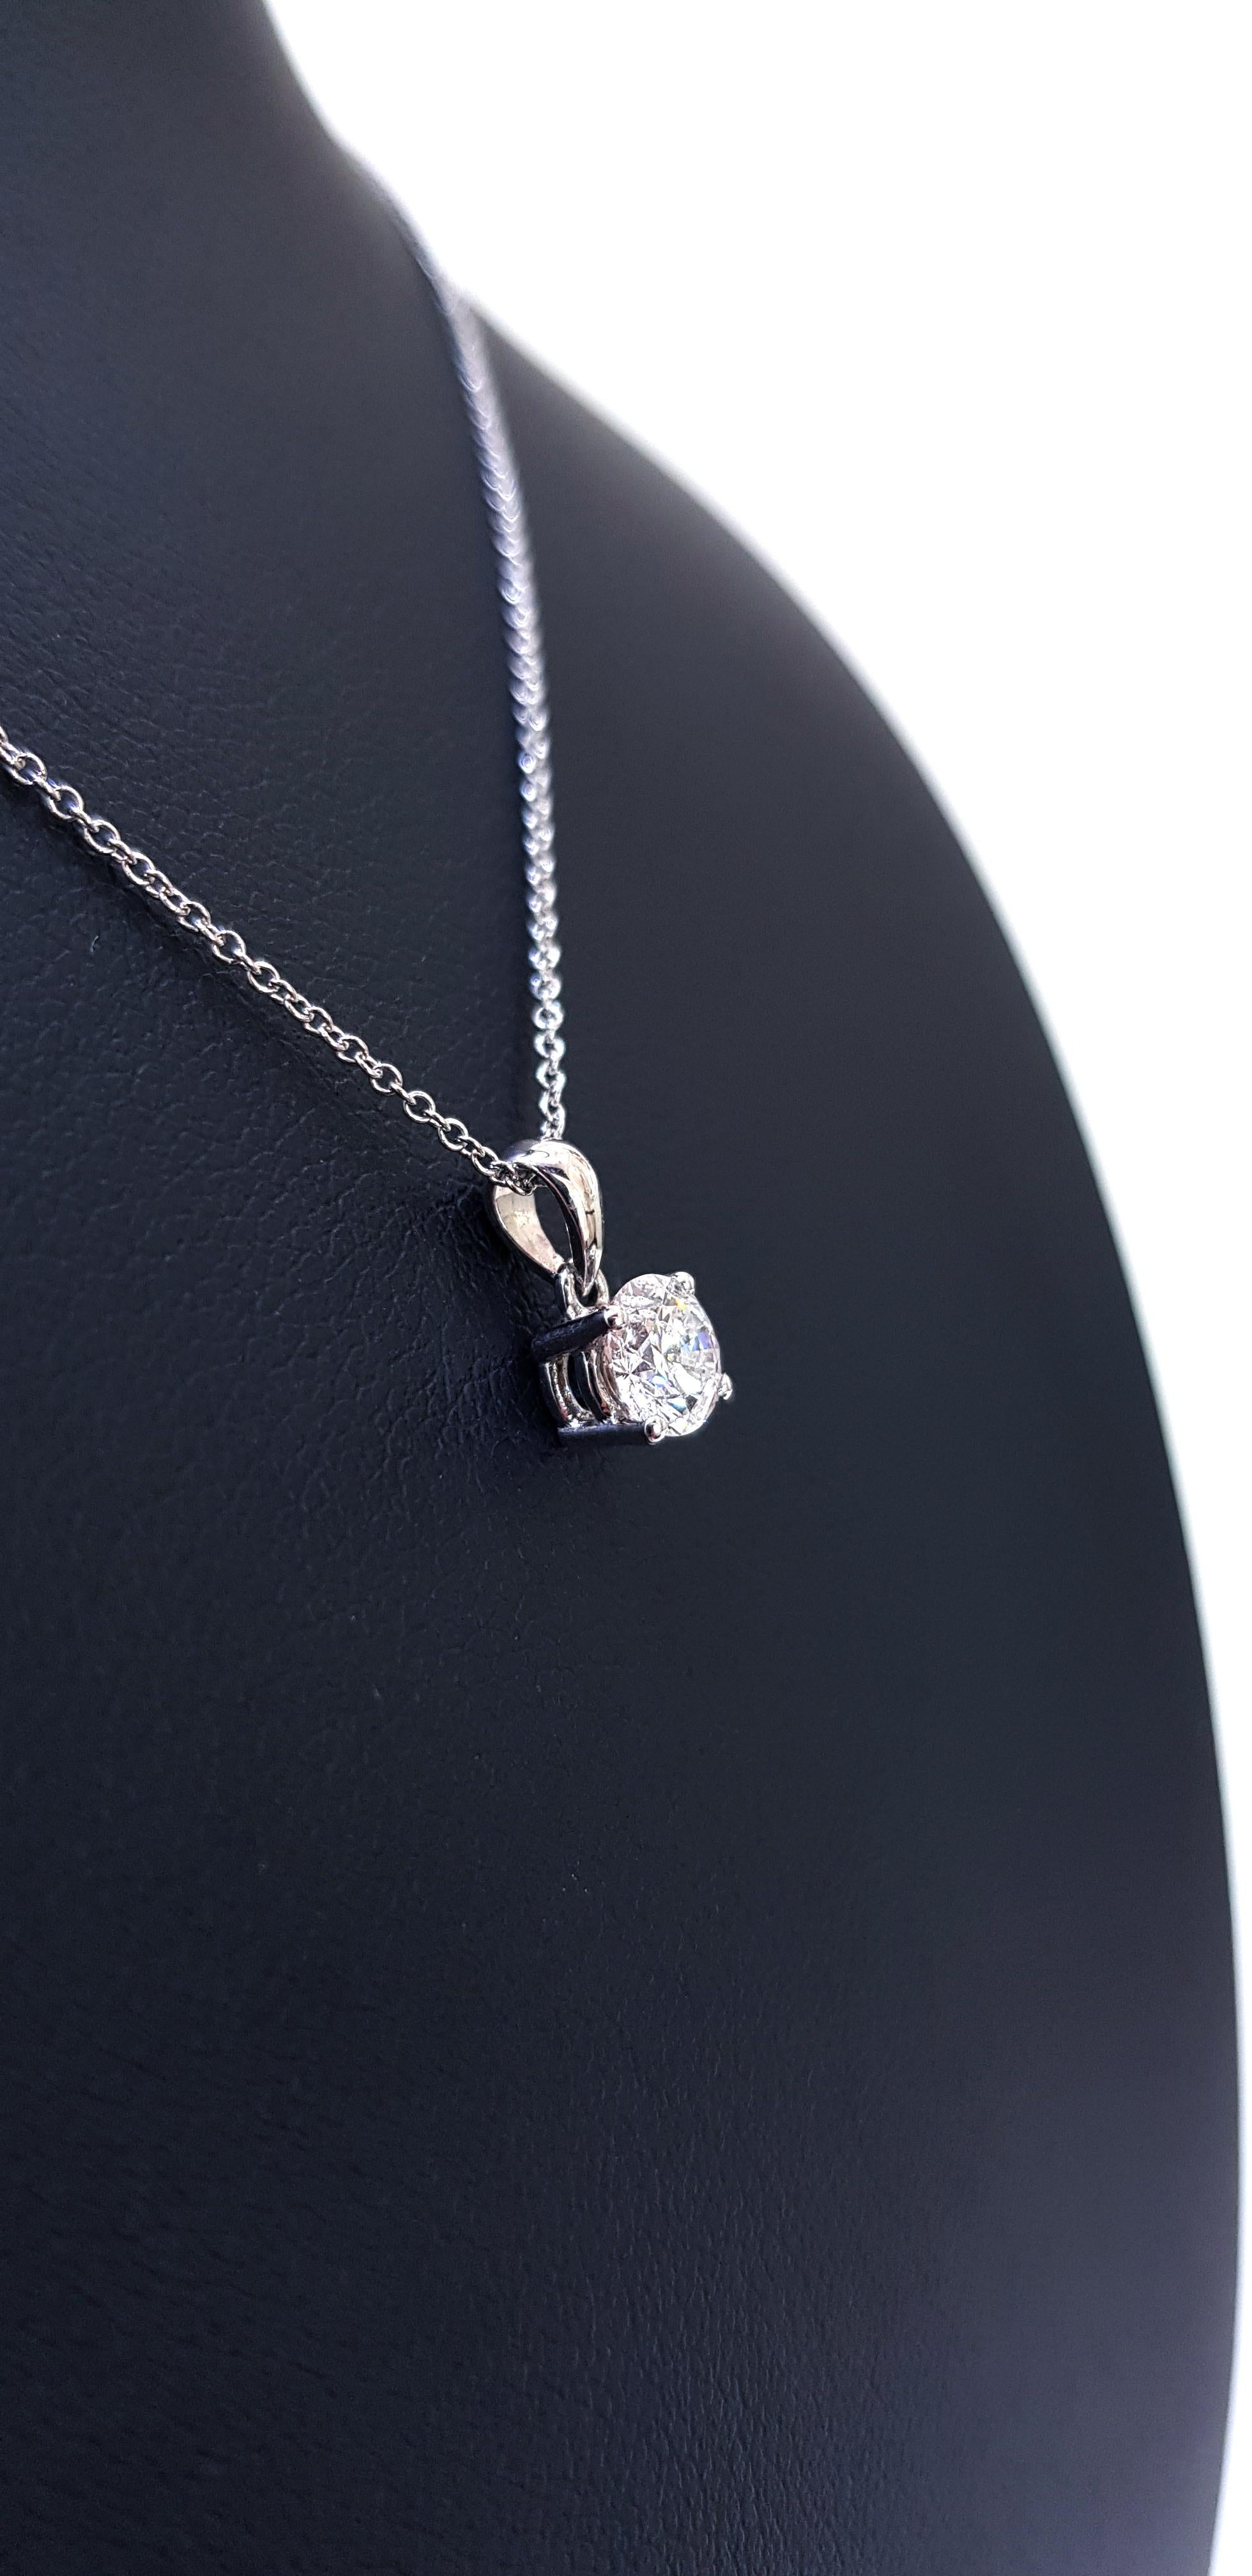 0.50 Carat Round Diamond 18 Karat White Gold Solitaire Pendant Chain Necklace For Sale 2